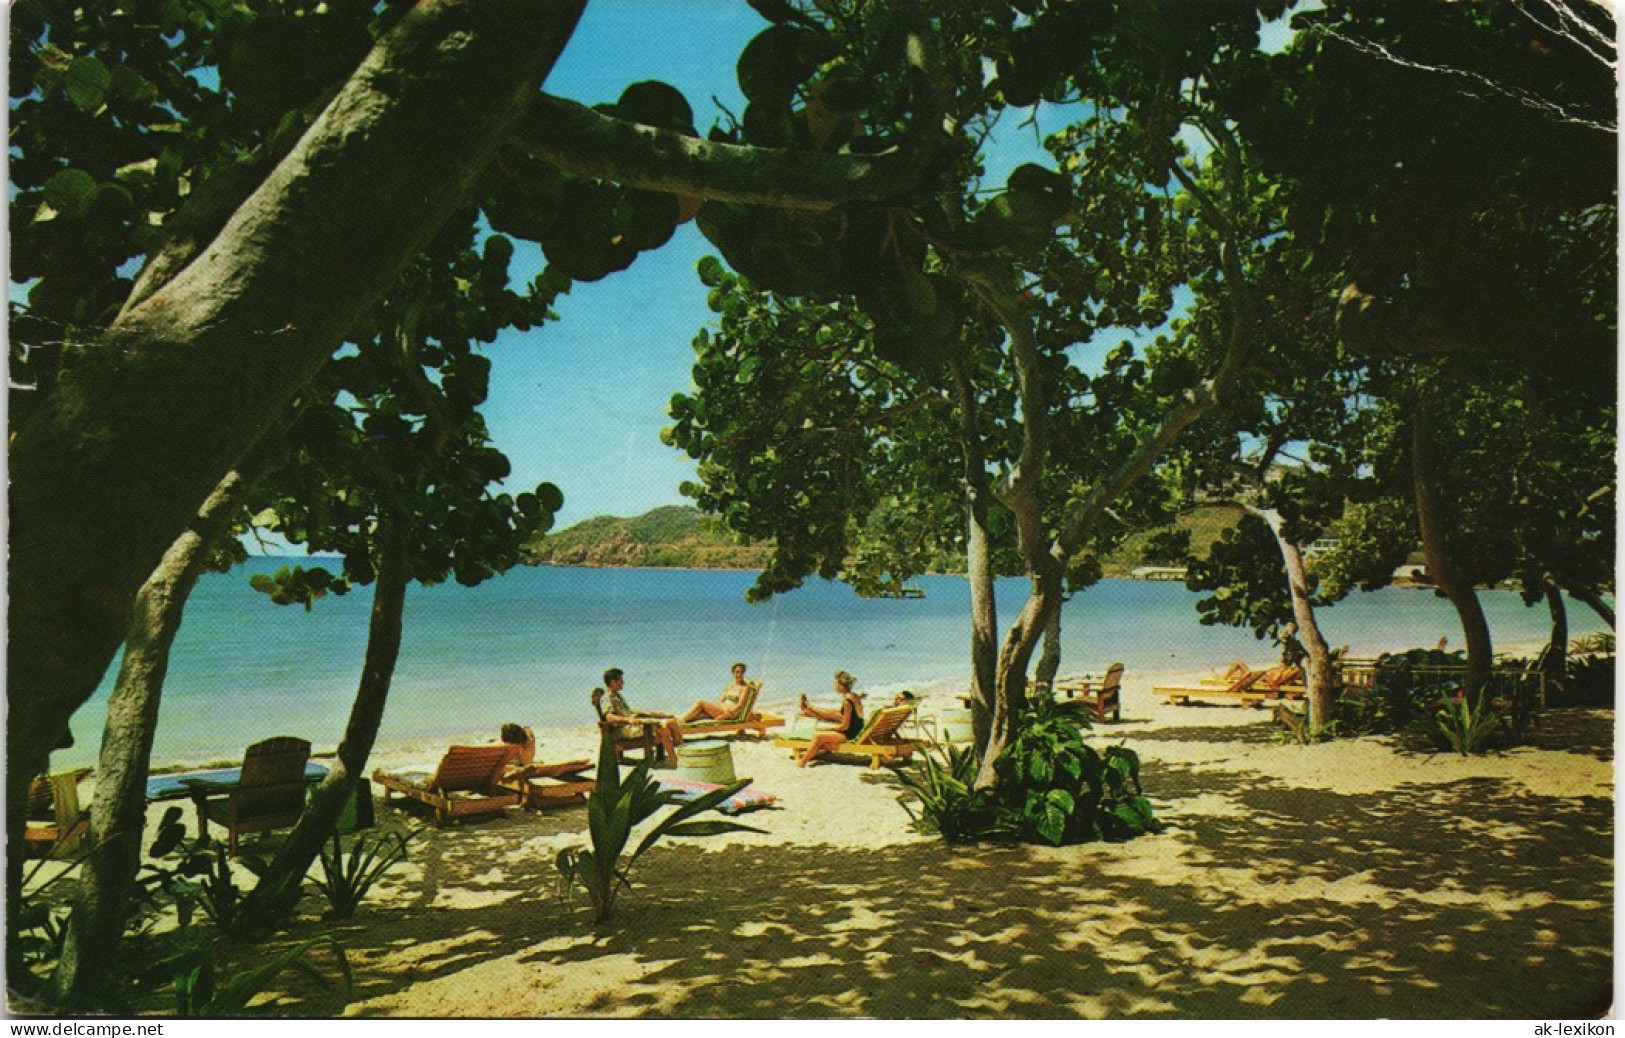 St. Thomas Sankt Thomas ISLAND BEACHCOMBER HOTEL Karibik Caribean Sea 1964 - Virgin Islands, US